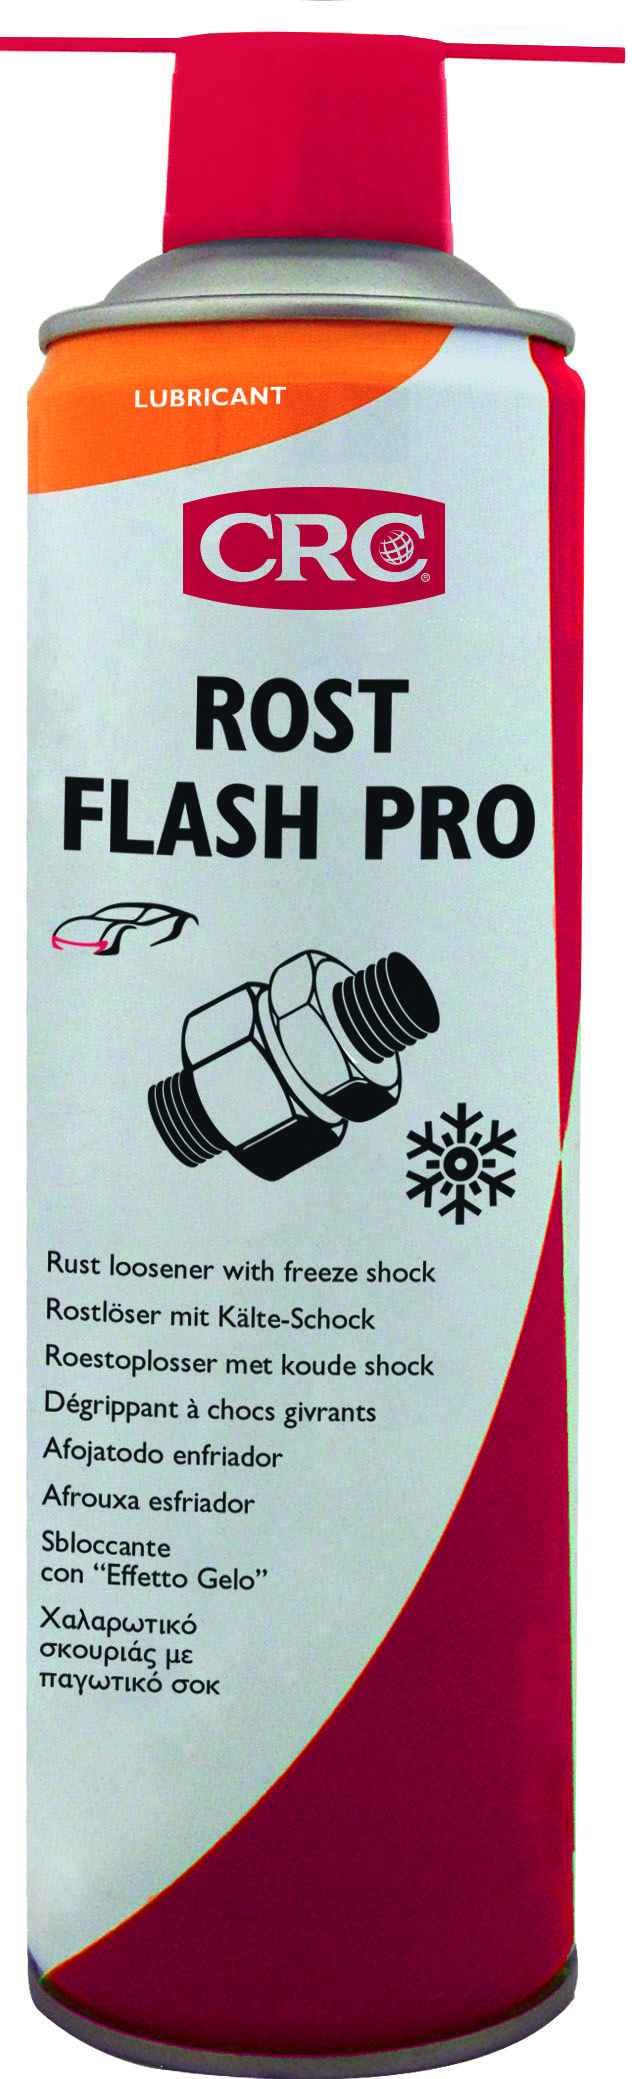 CRC Rost Flash Pro